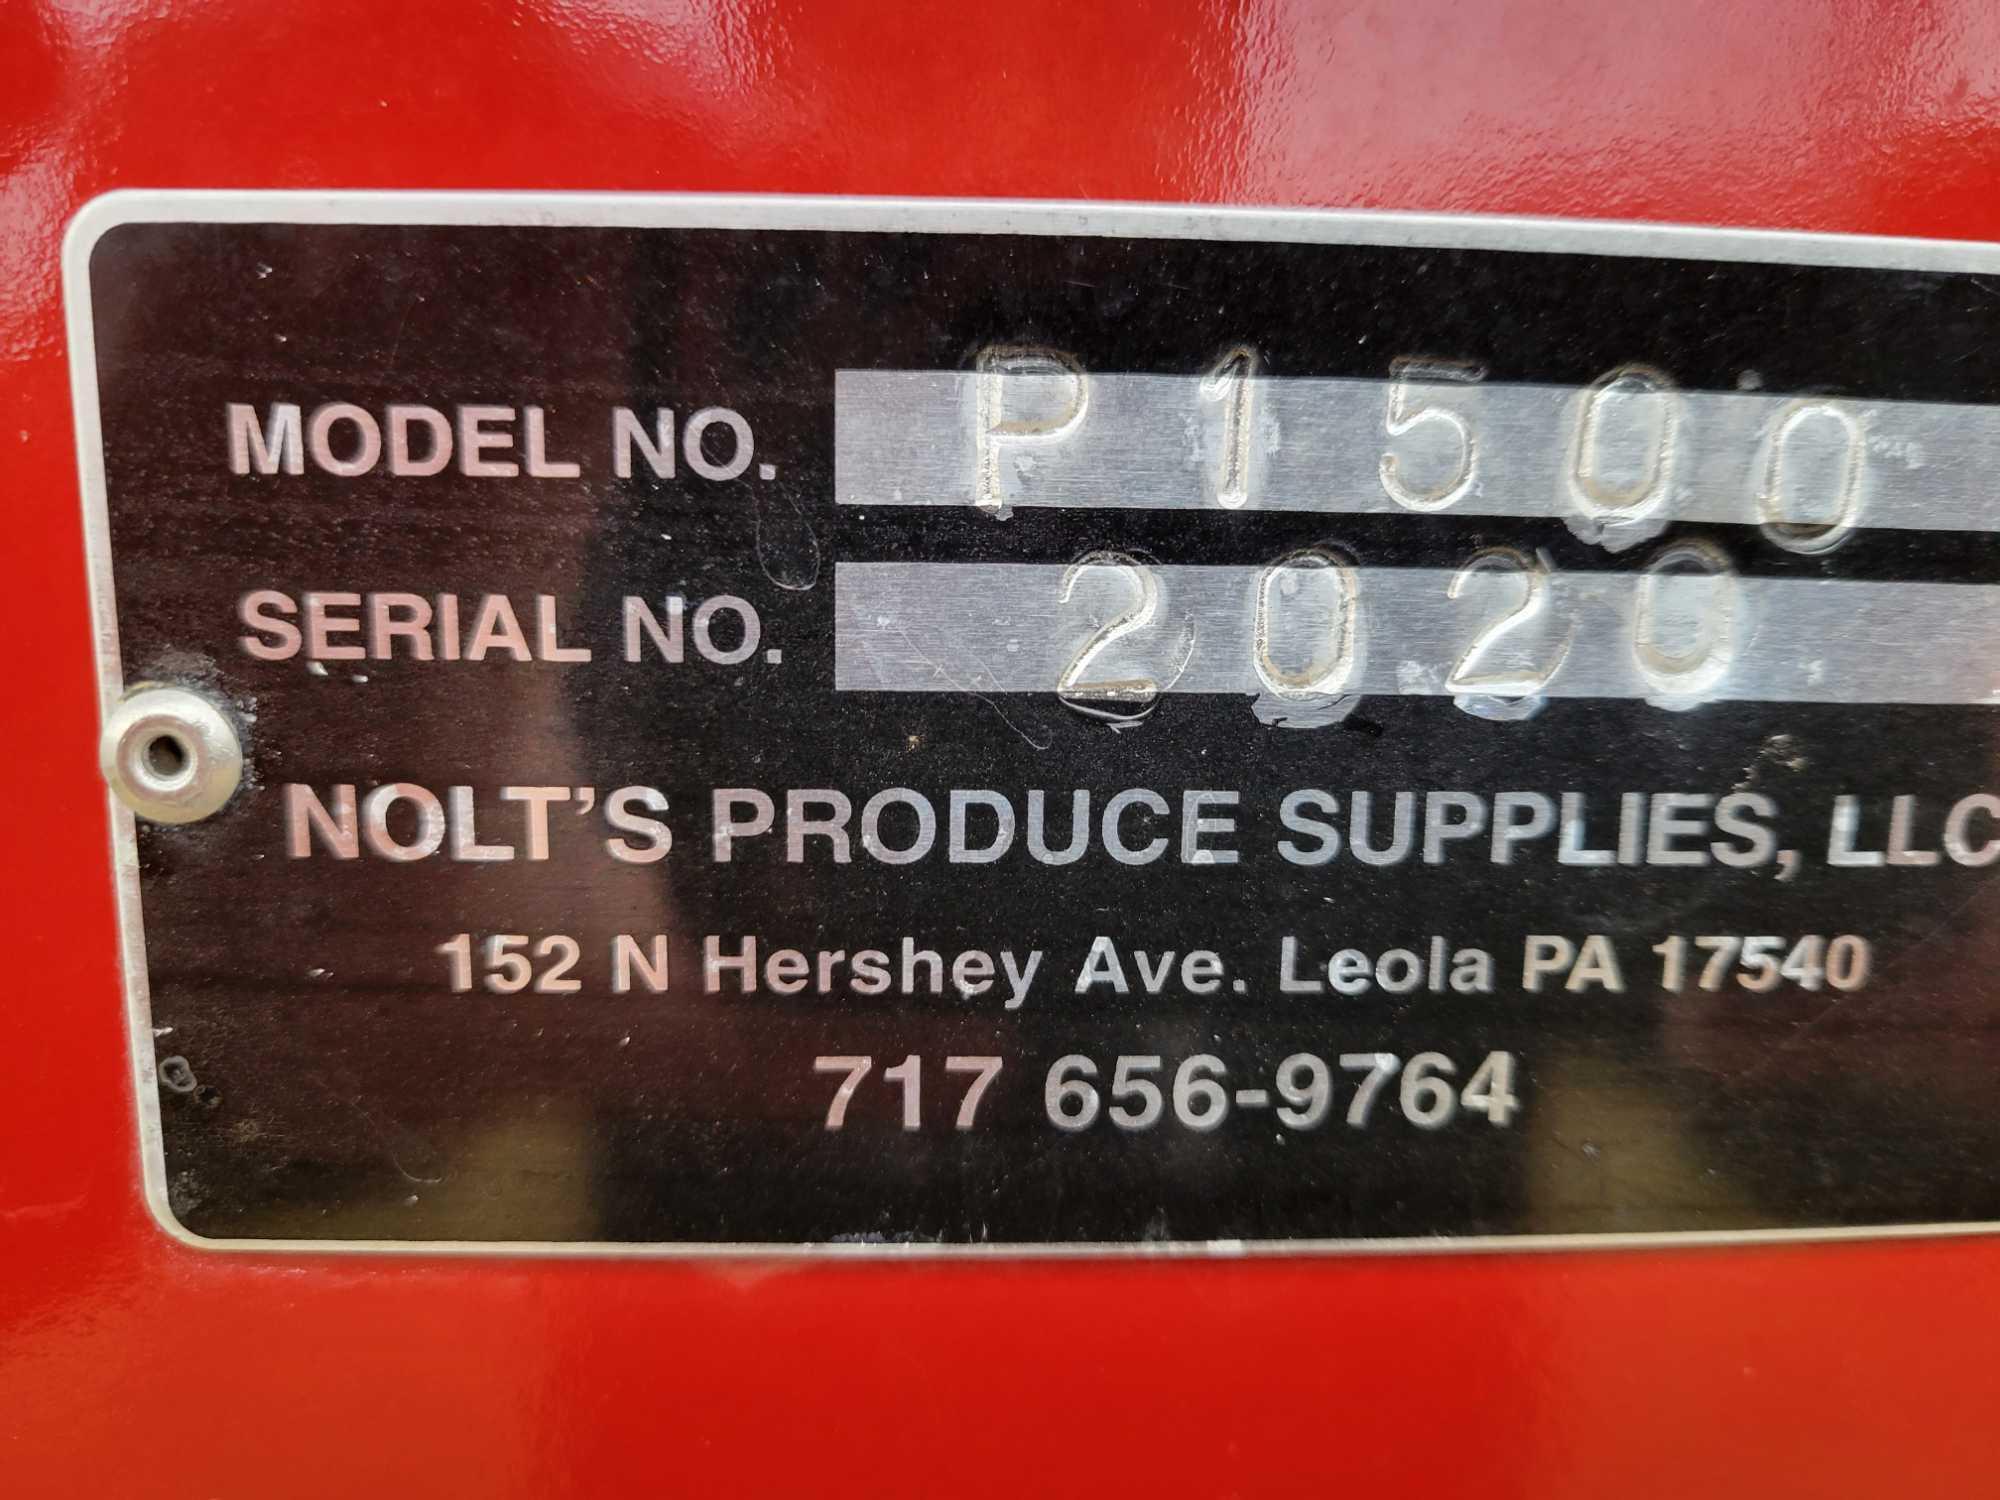 Nolt's Produce Supplies